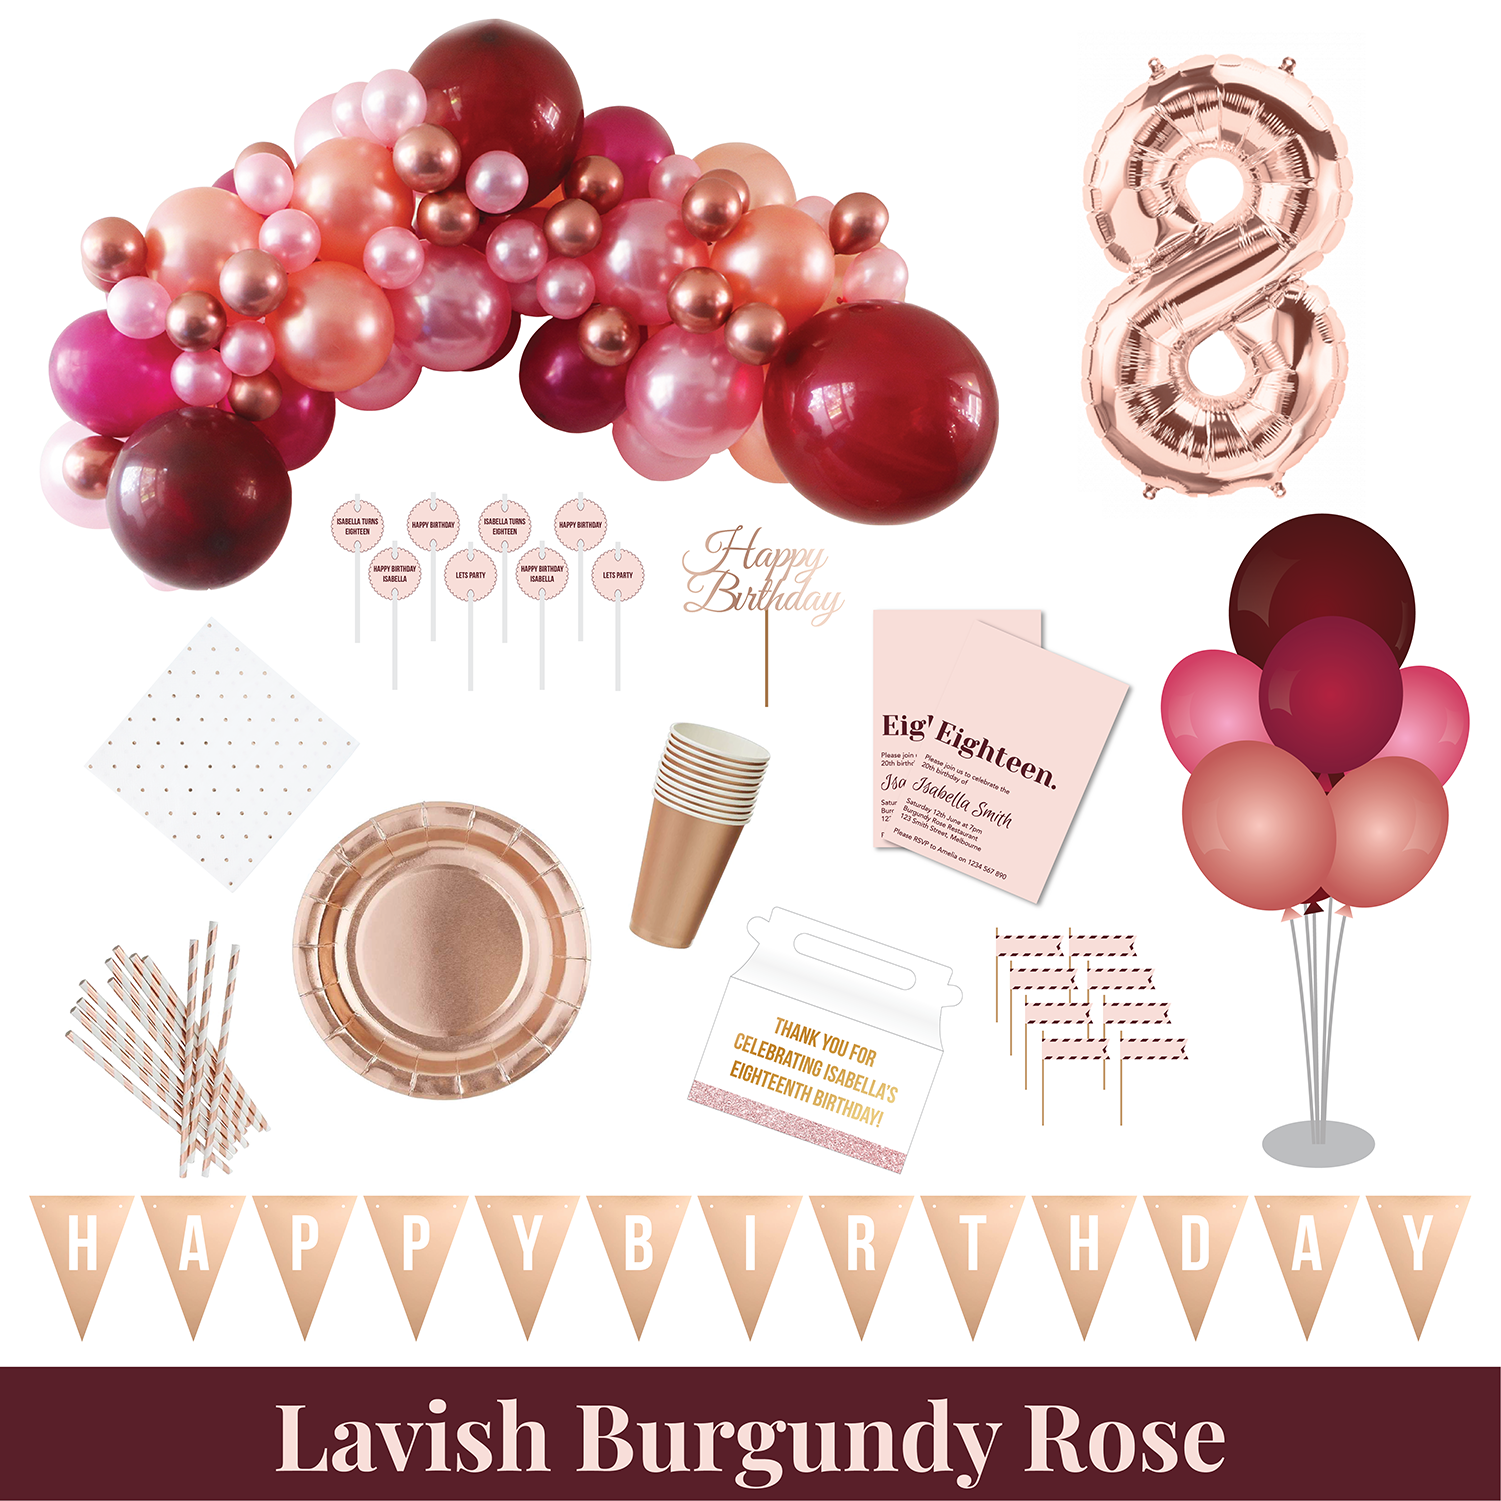 Lavish Burgundy Rose party kit contents